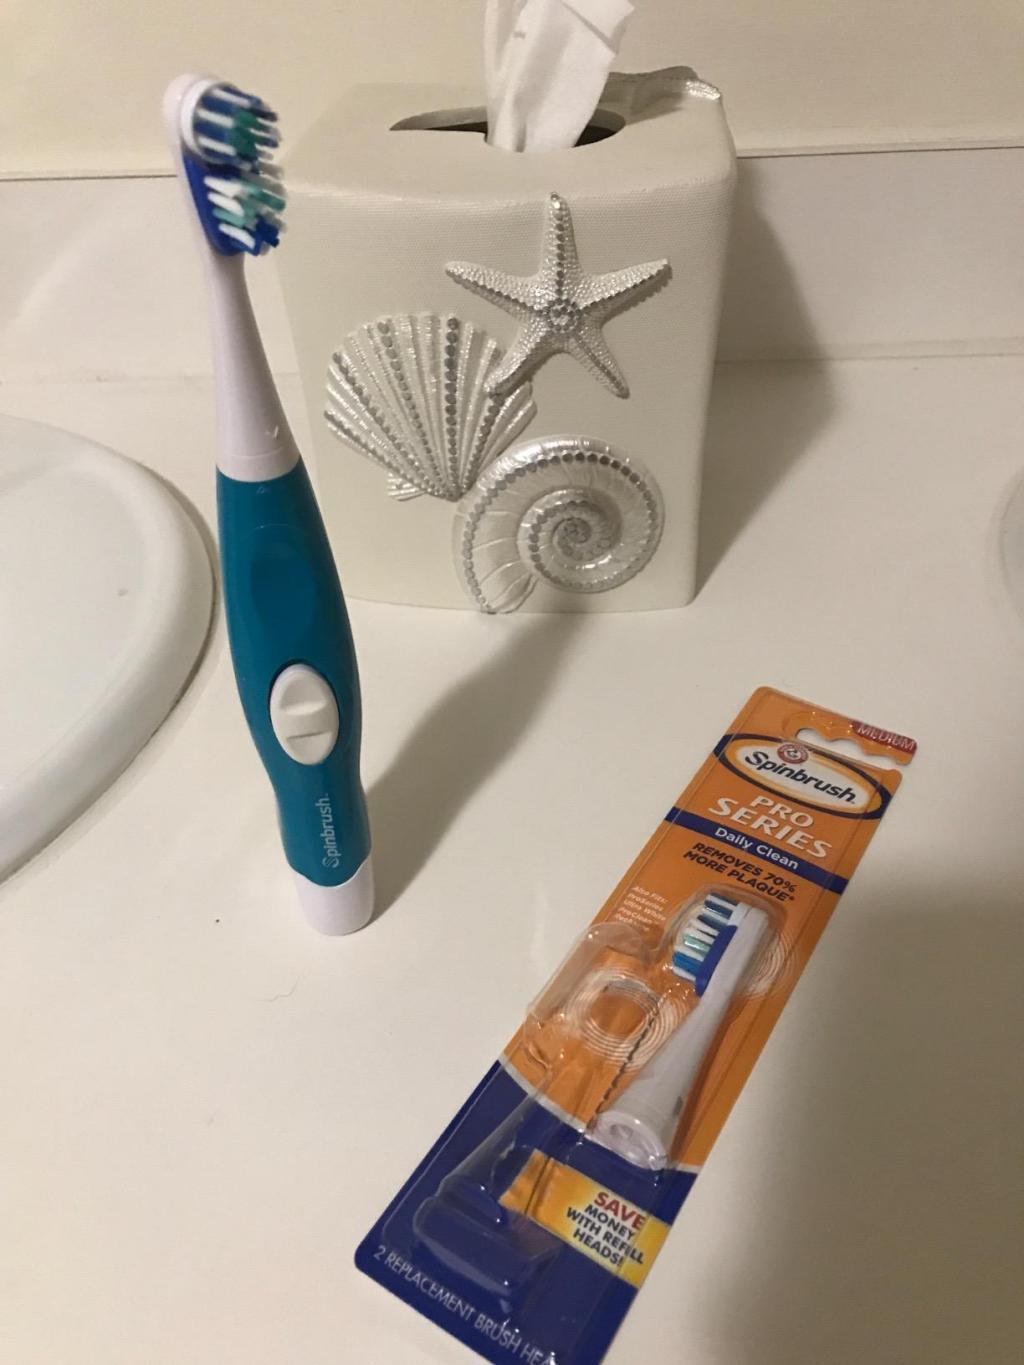 Spinbrush Pro Clean on bathroom shelf